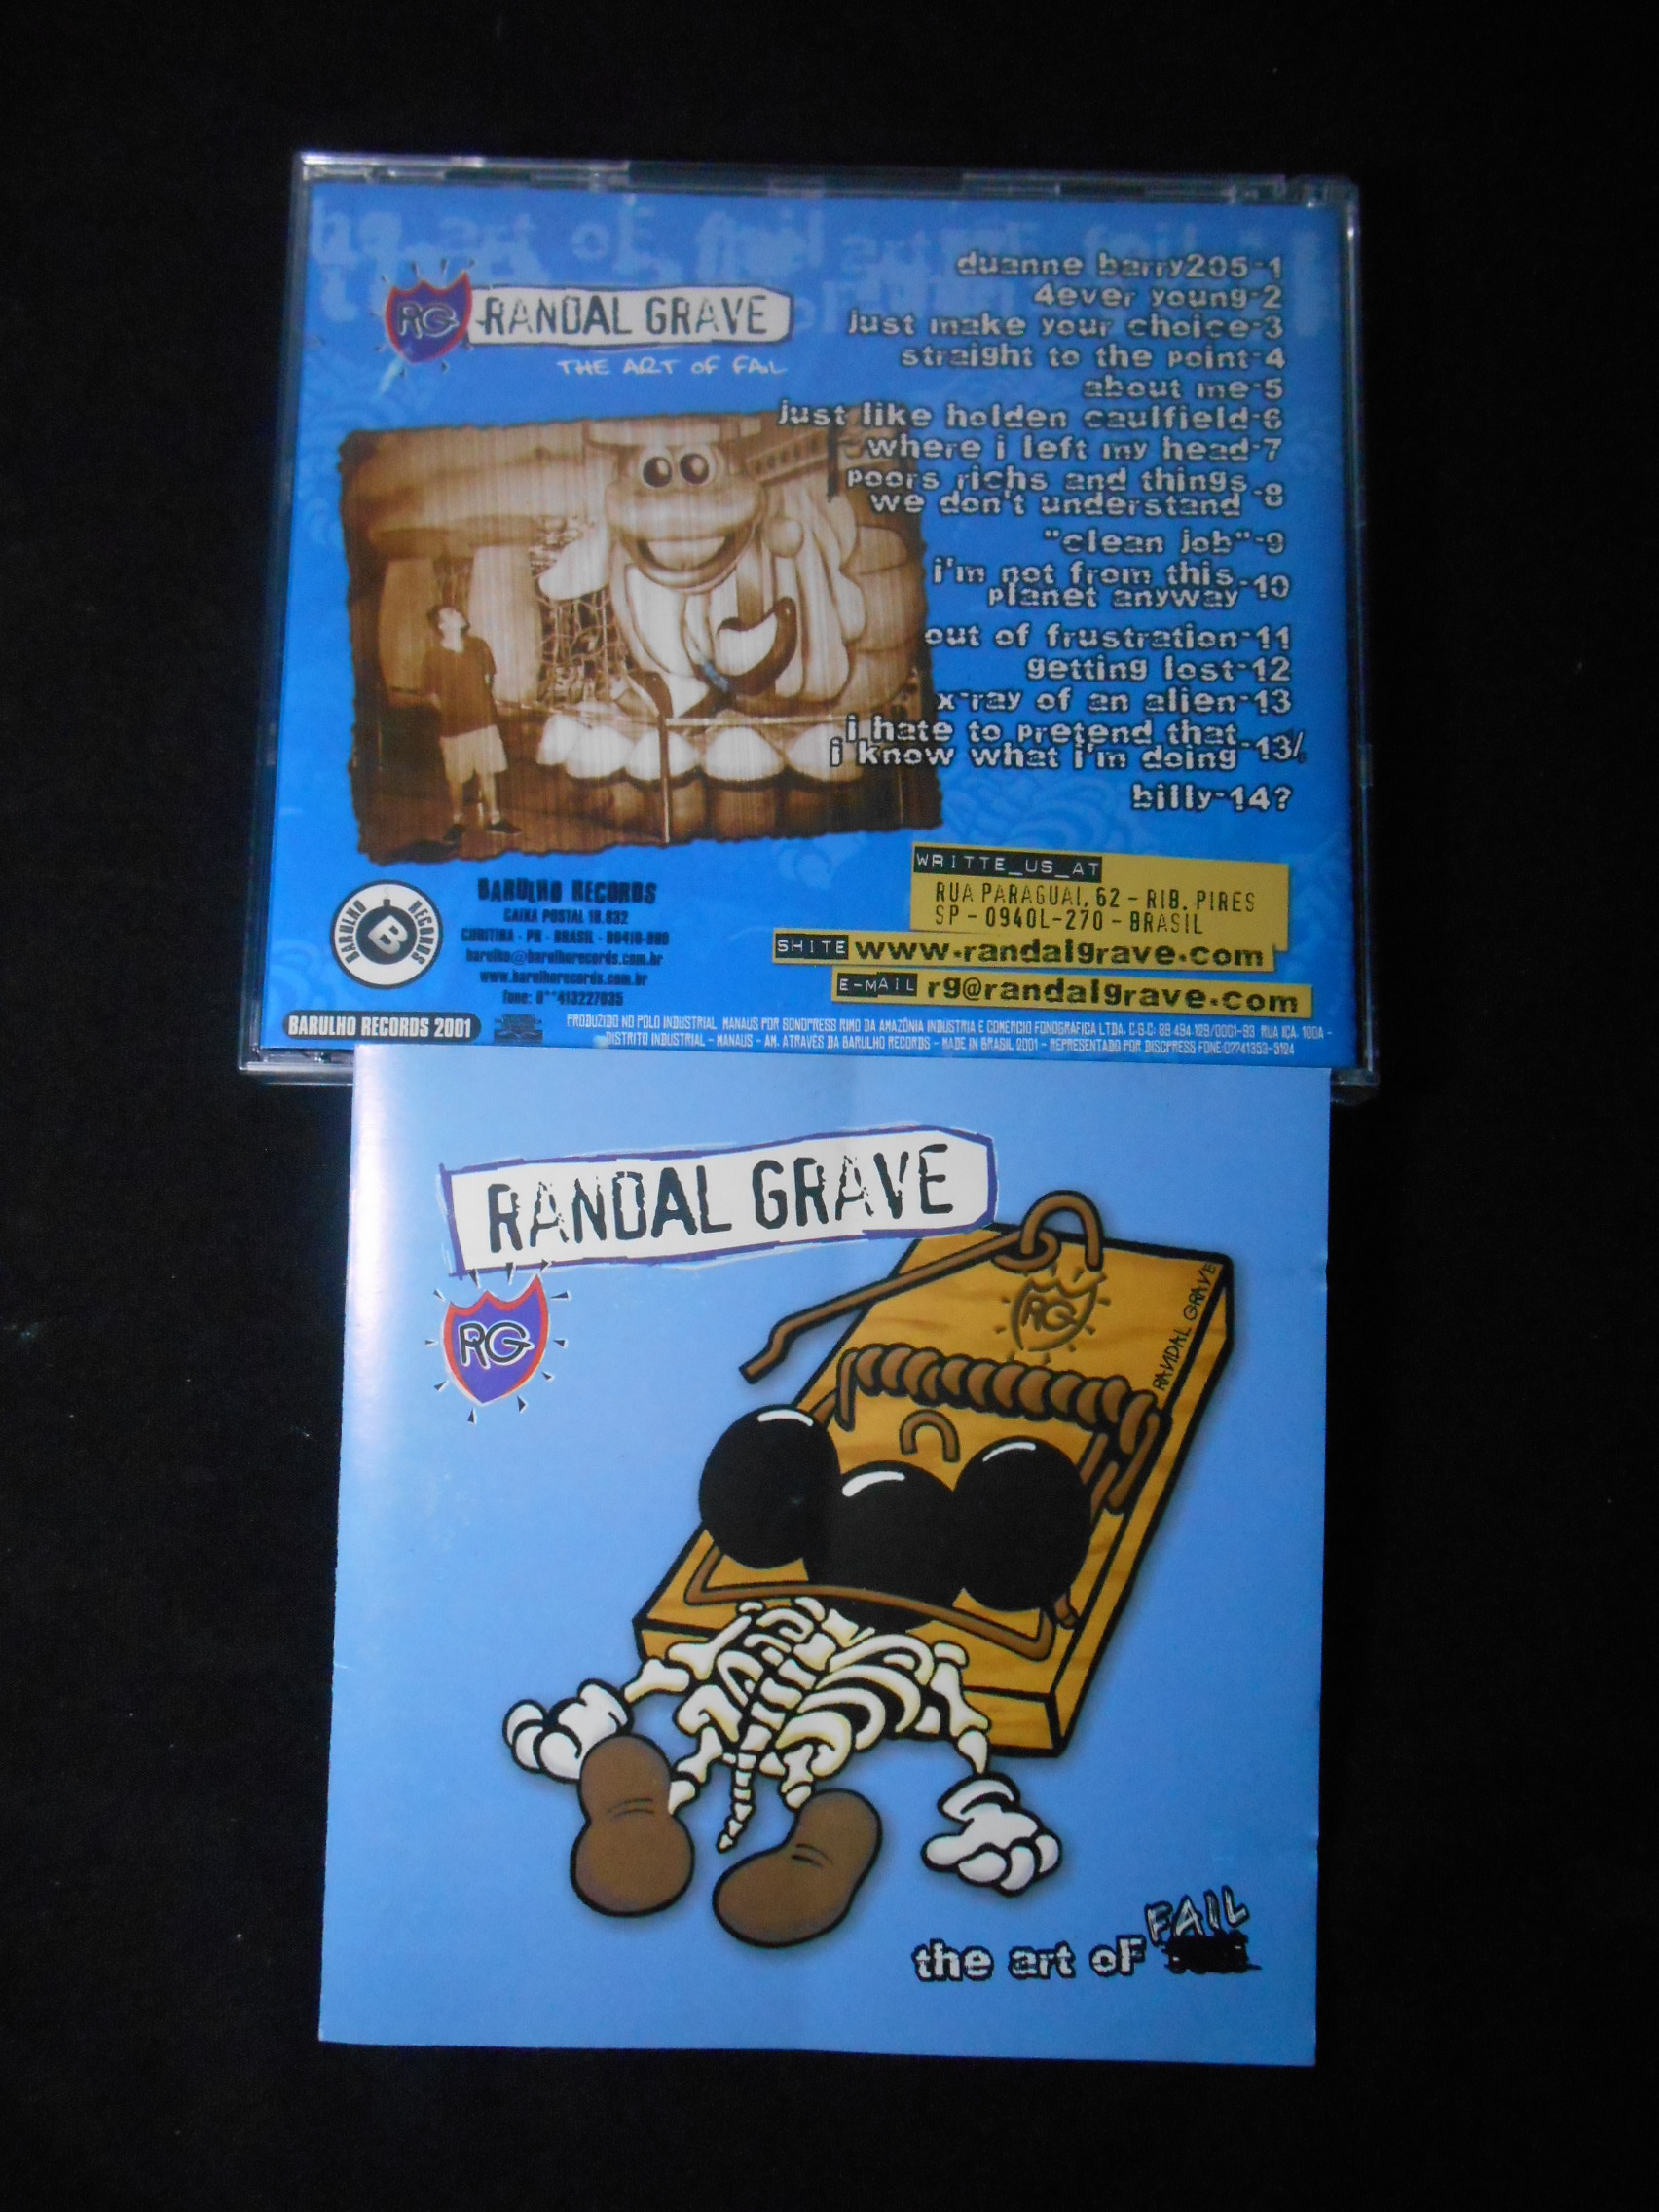 CD - Randal Grave - The Art Of Fail